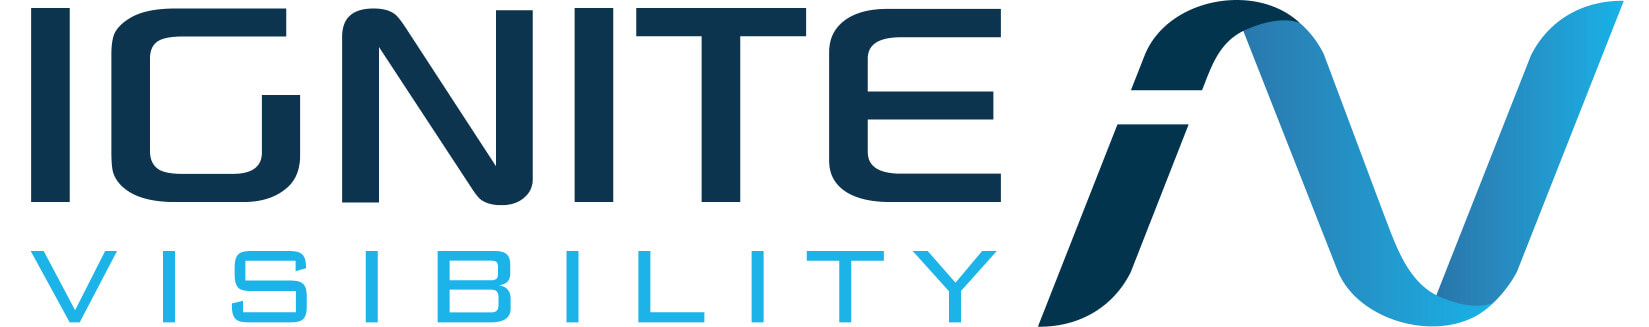  Top Enterprise SEO Business Logo: Ignite Visibility